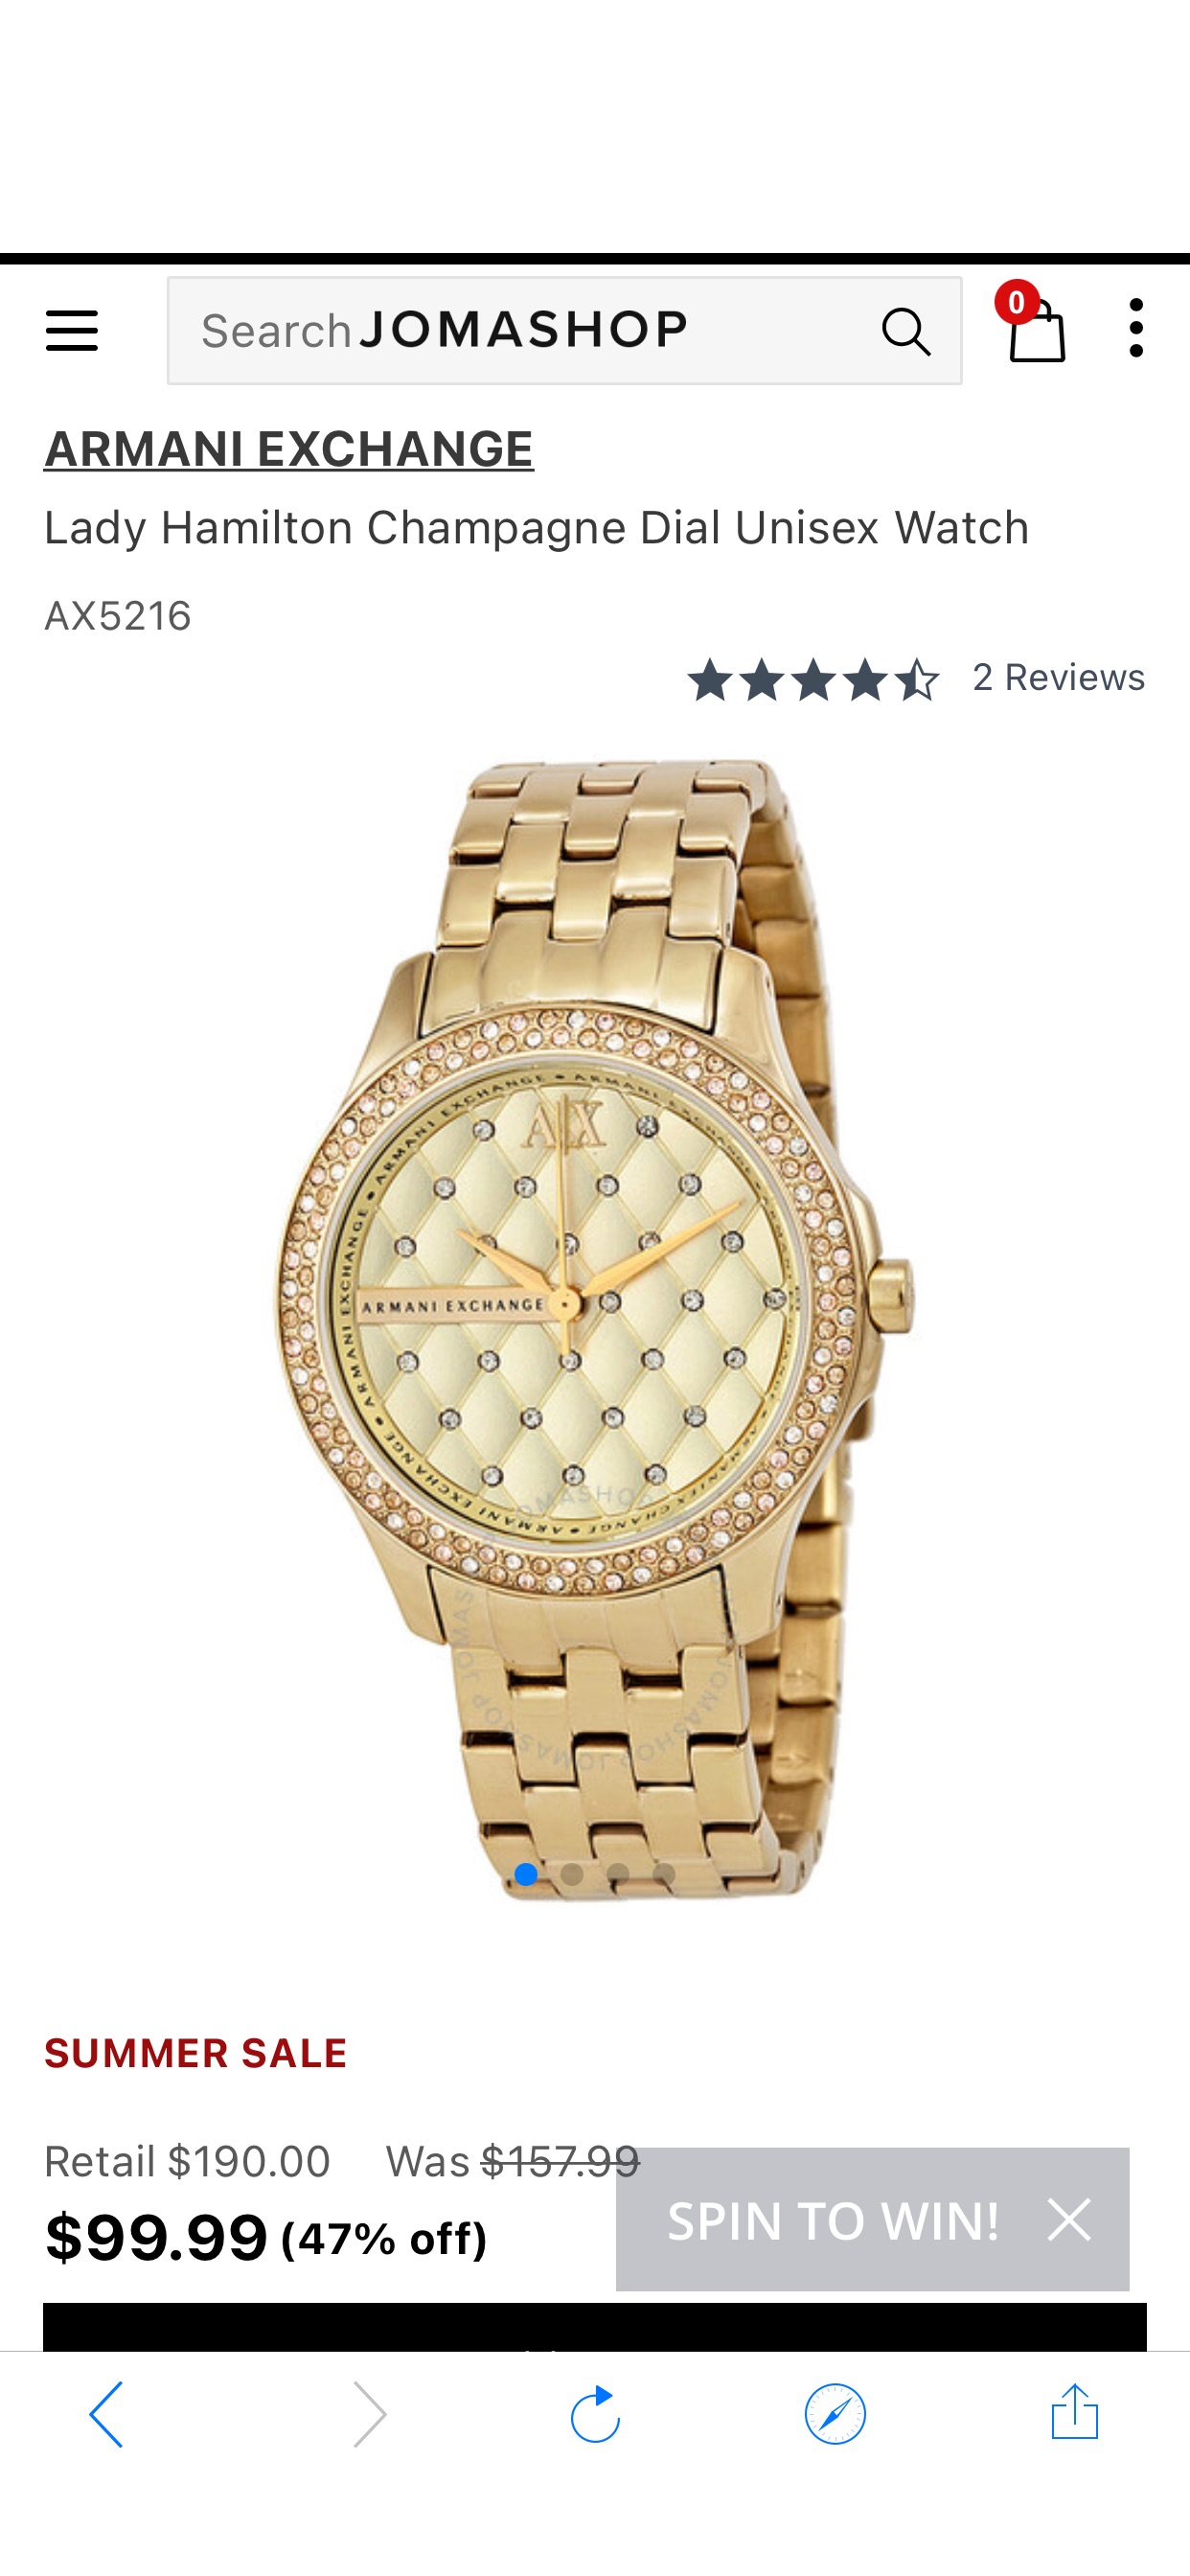 Armani Exchange Lady Hamilton Champagne Dial Unisex Watch AX5216 723763208666 - Watches - Jomashop
手表